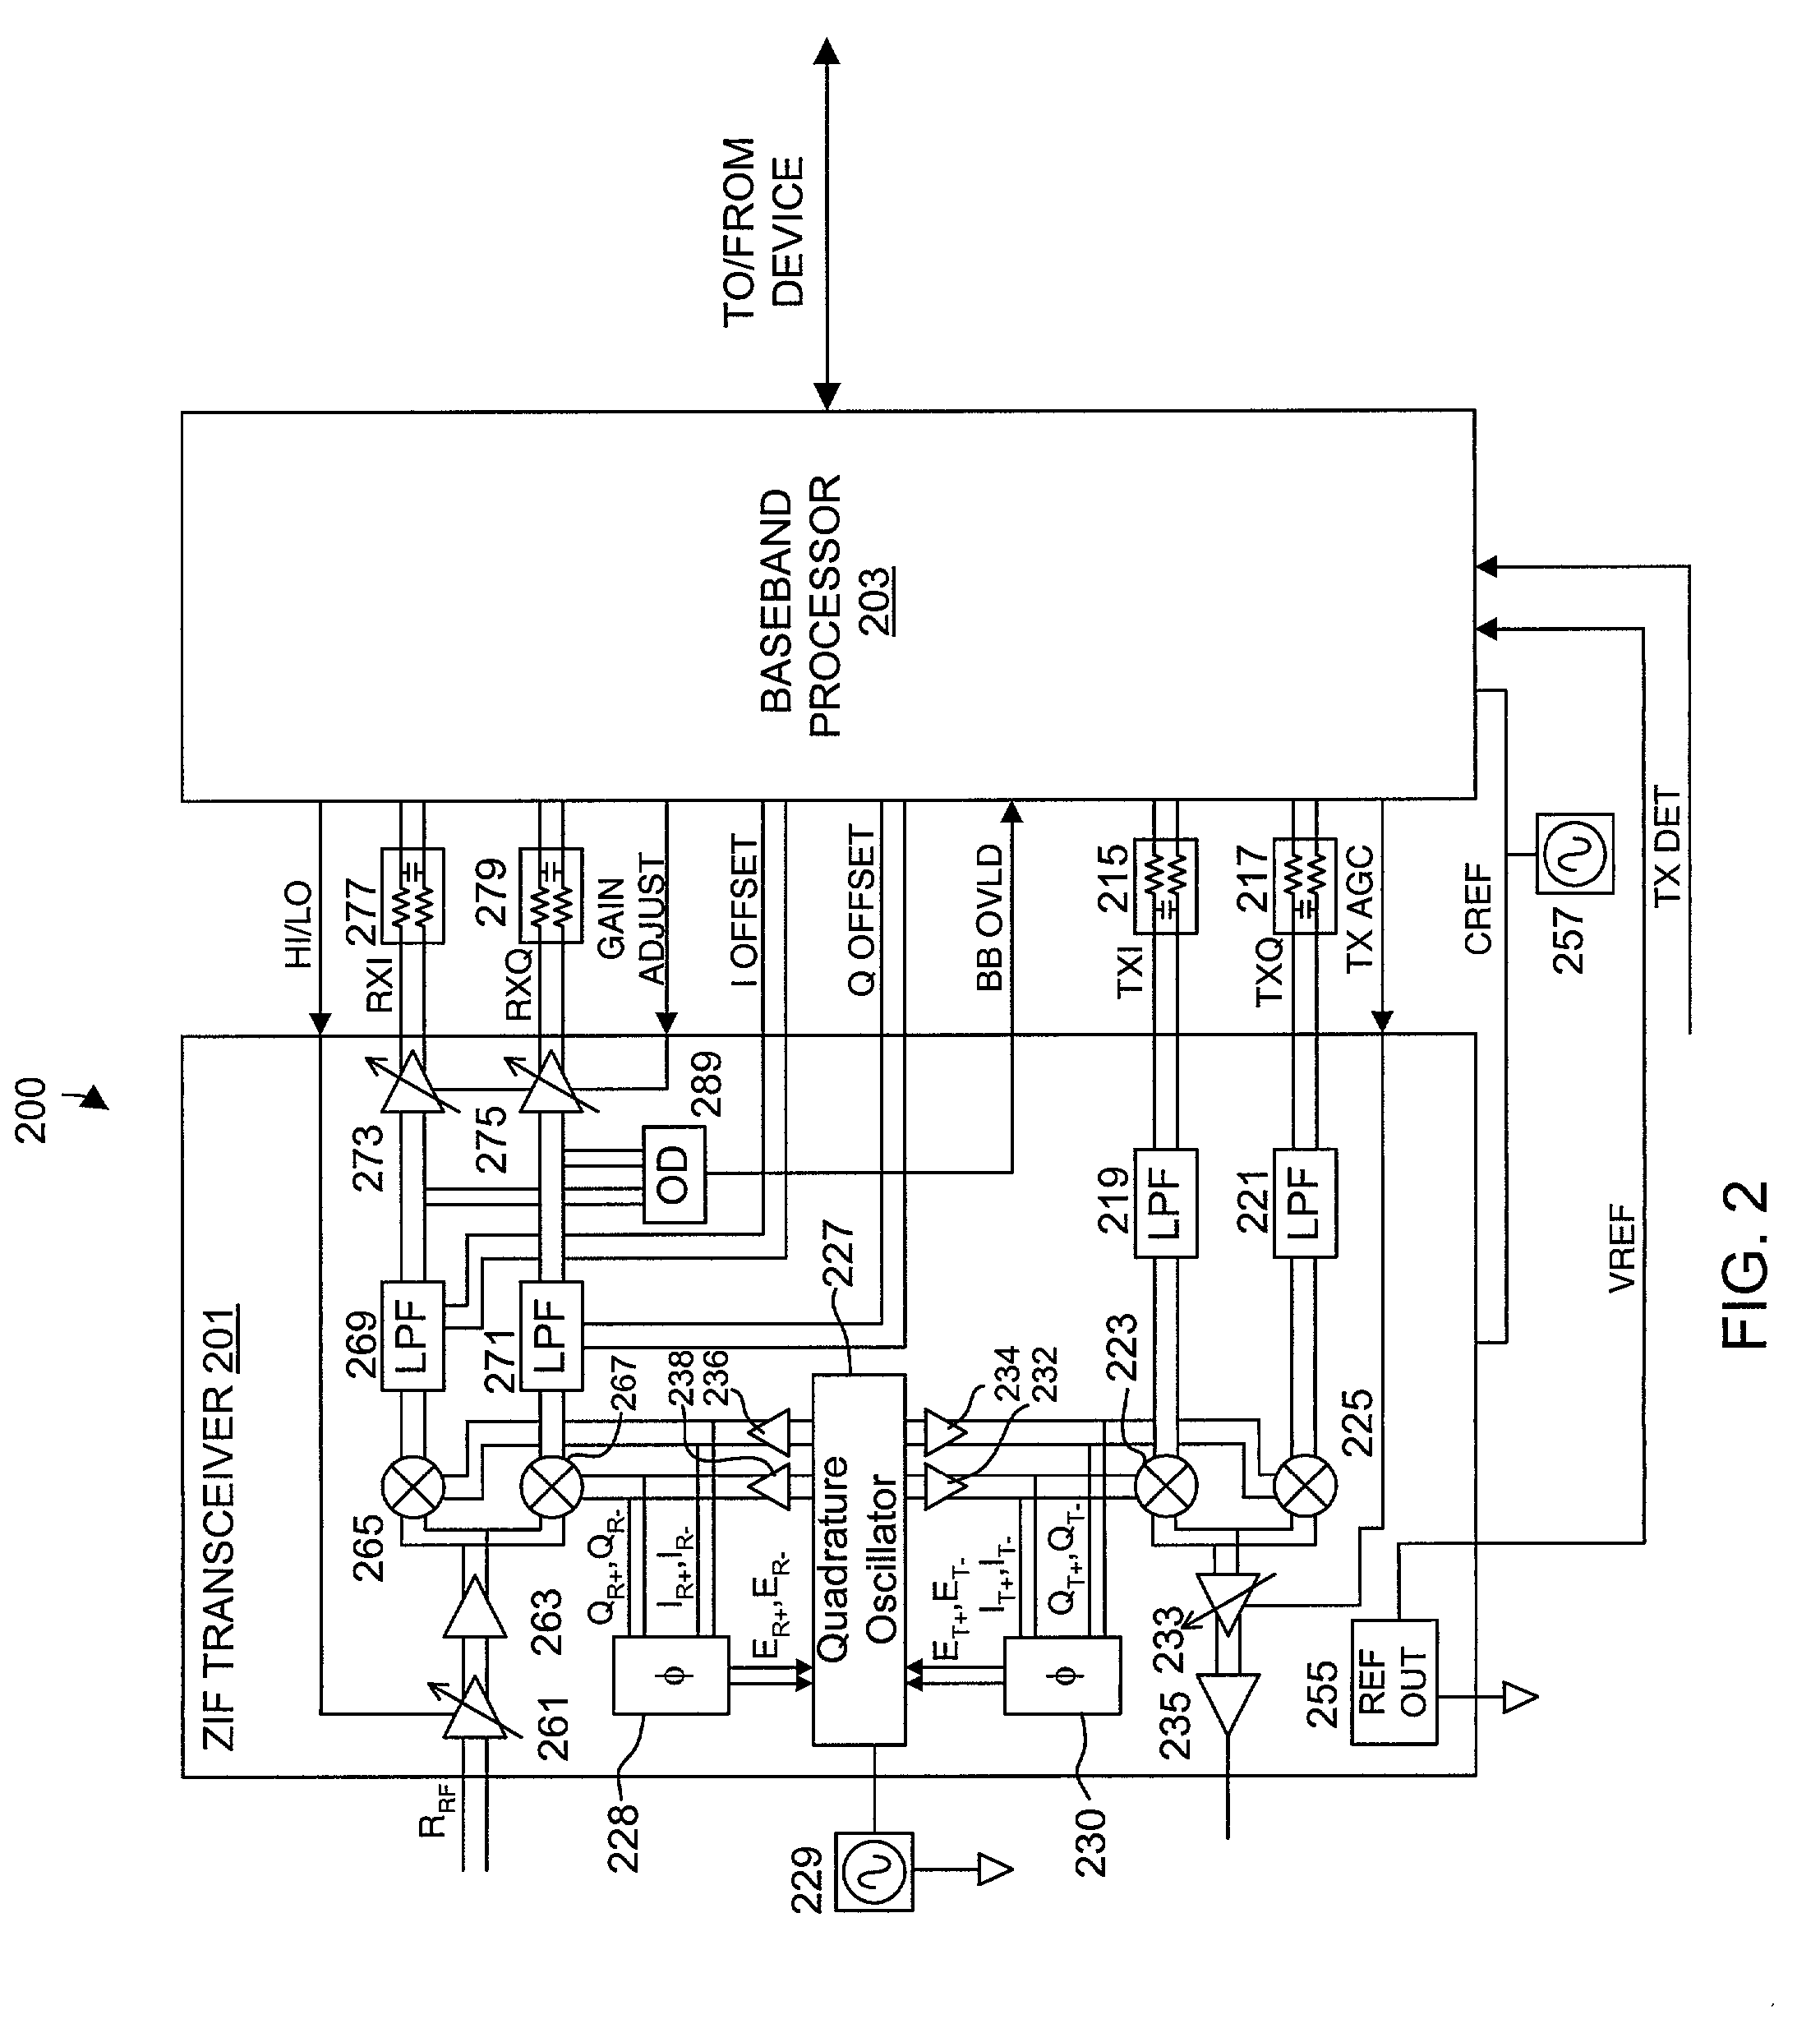 Quadrature oscillator with phase error correction